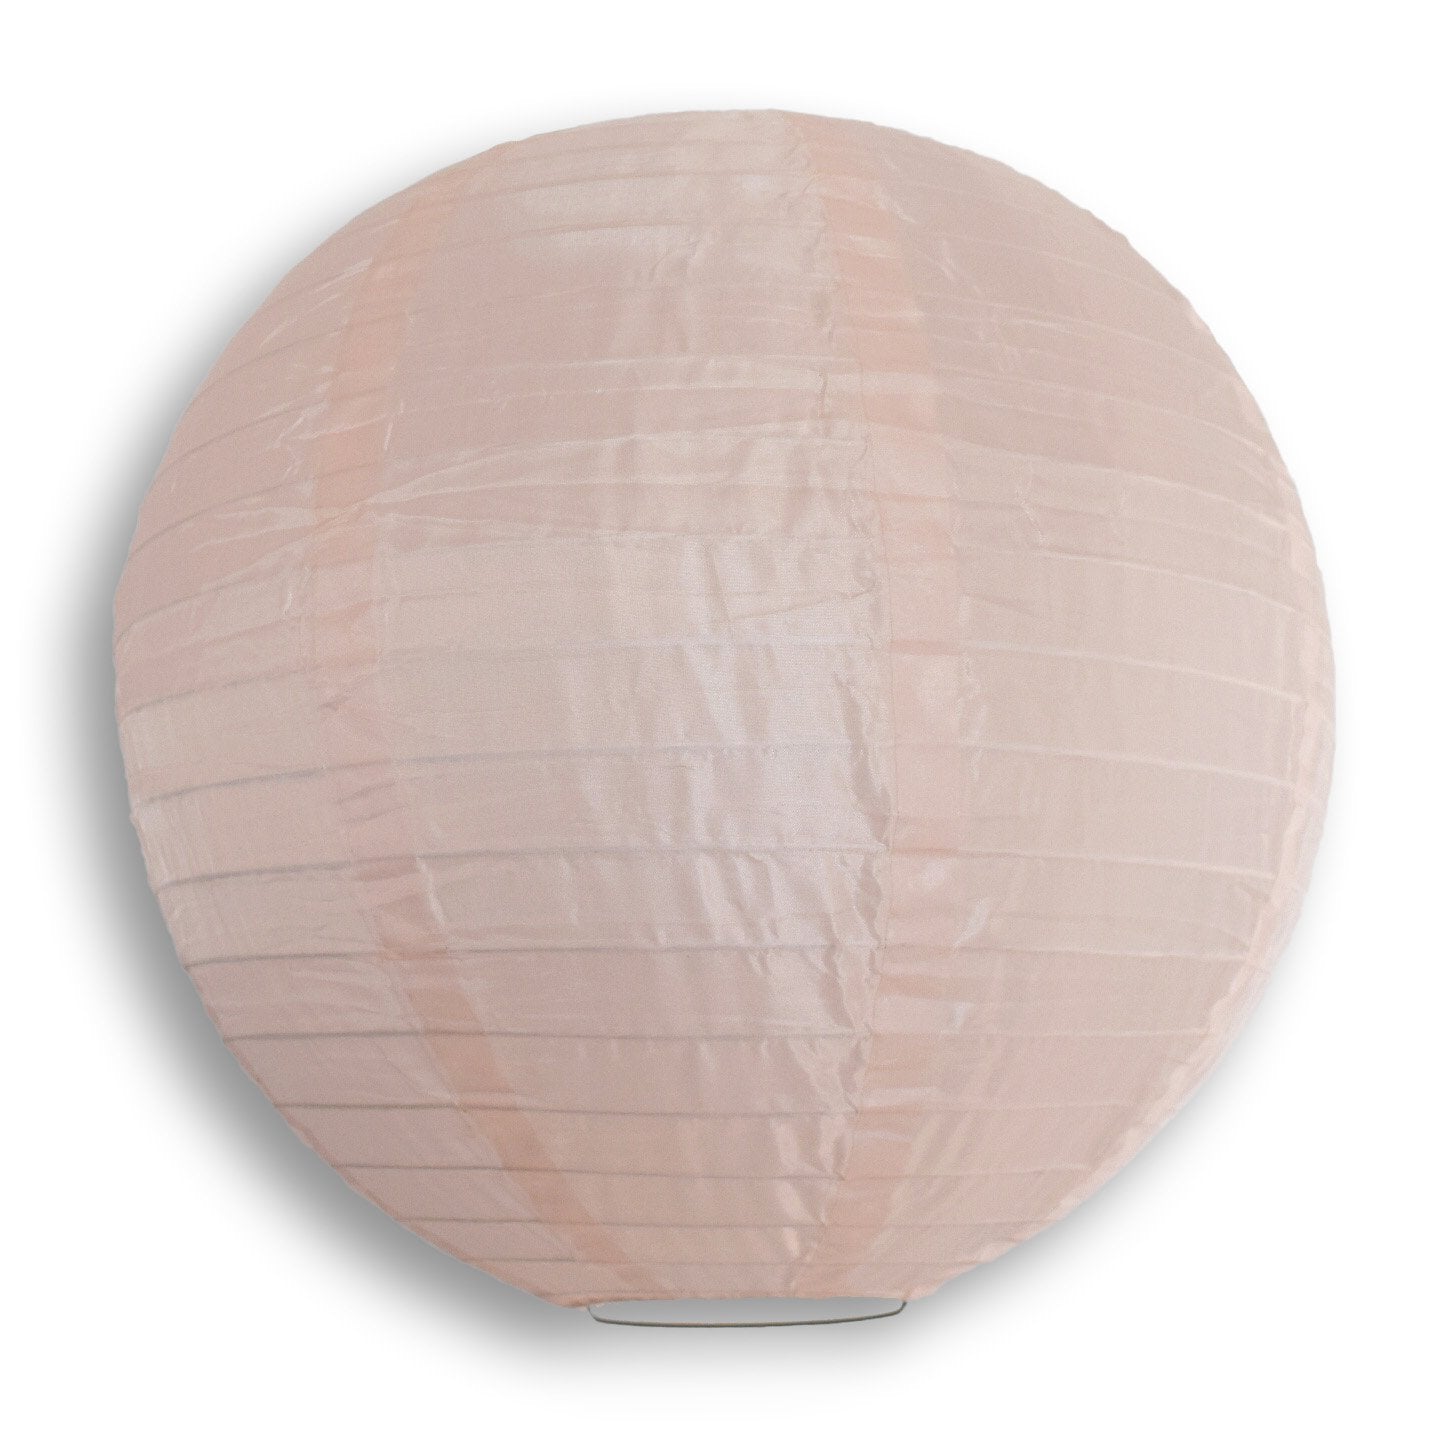 30" Rose Quartz Pink Jumbo Shimmering Nylon Lantern, Even Ribbing, Durable, Dry Outdoor Hanging Decoration